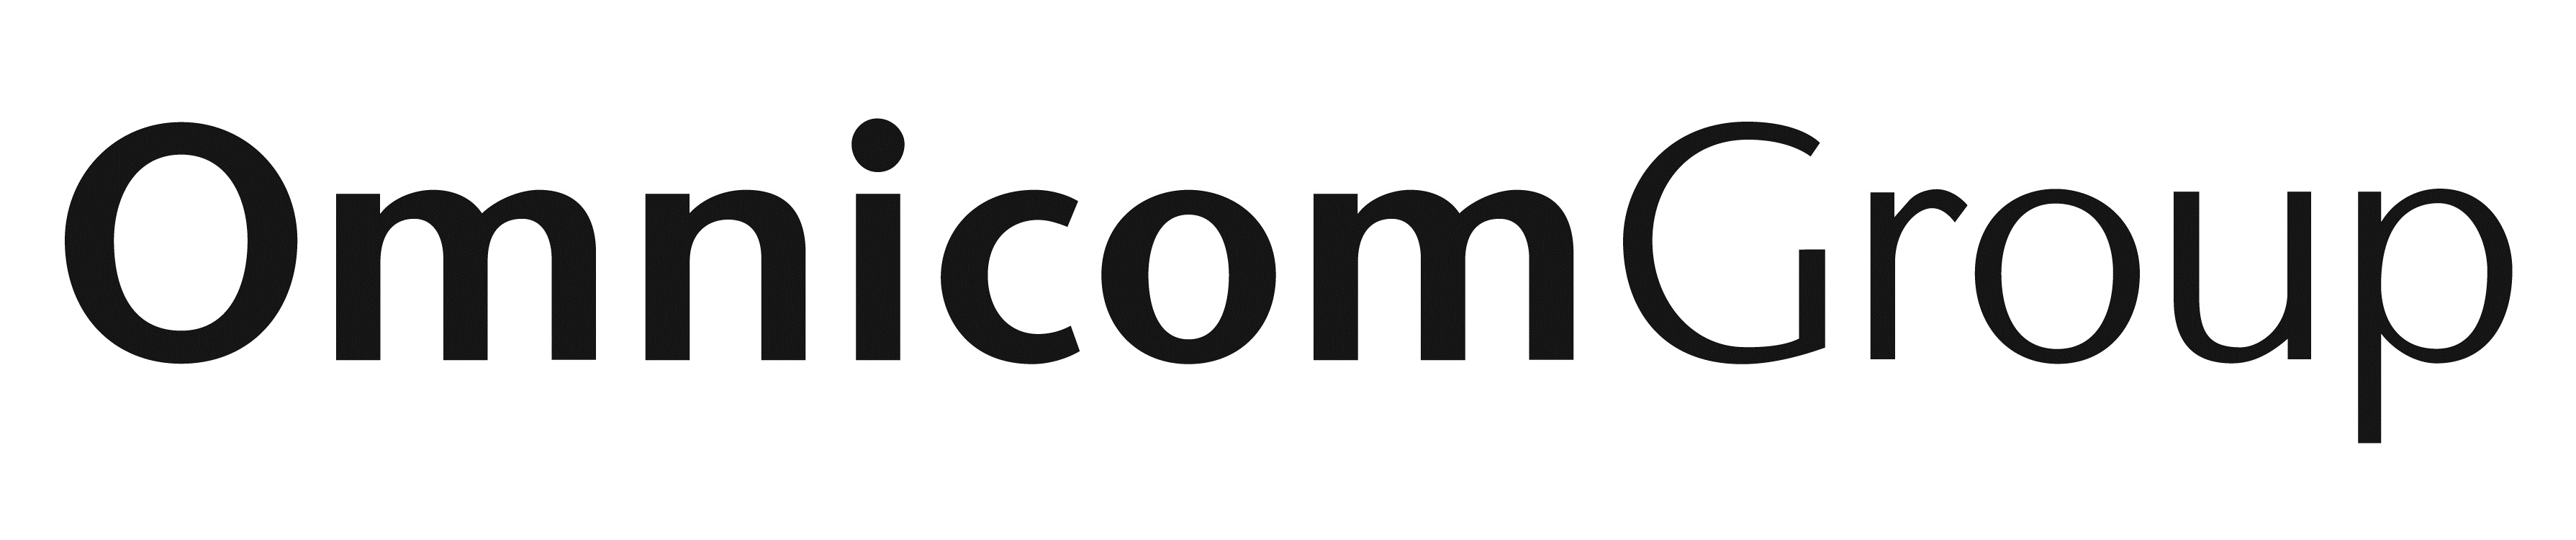 Omnicom Group Logo Vector PNG - 32602